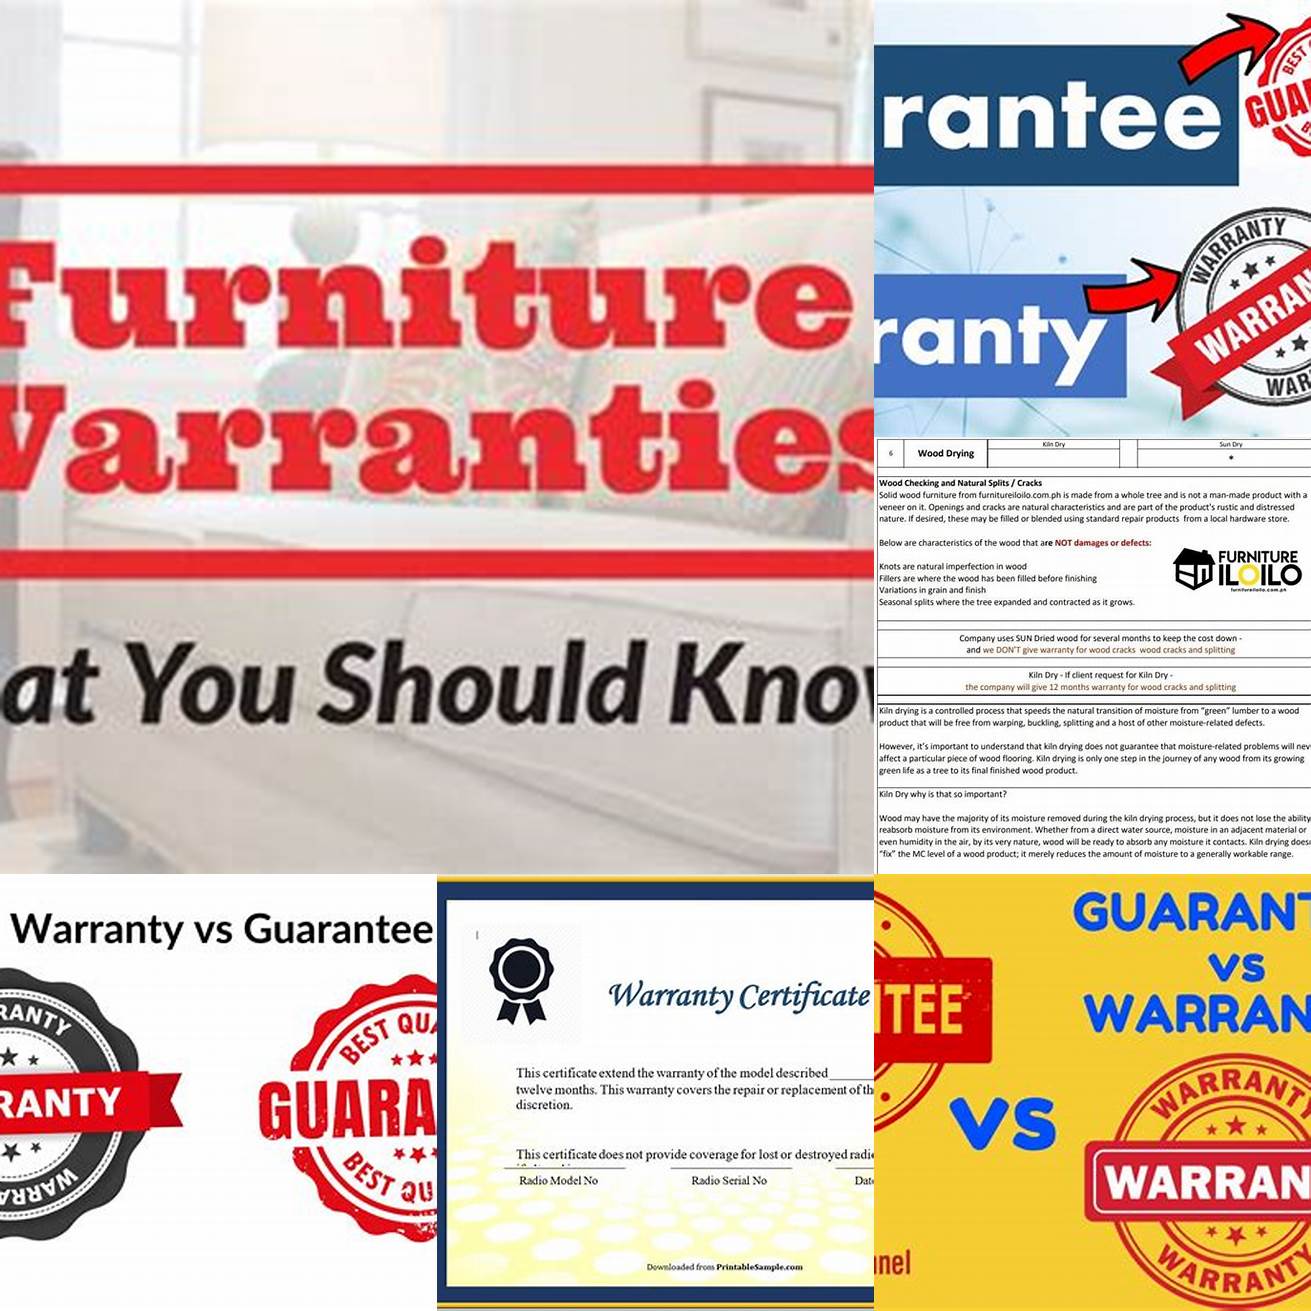 Warranty and Guarantee